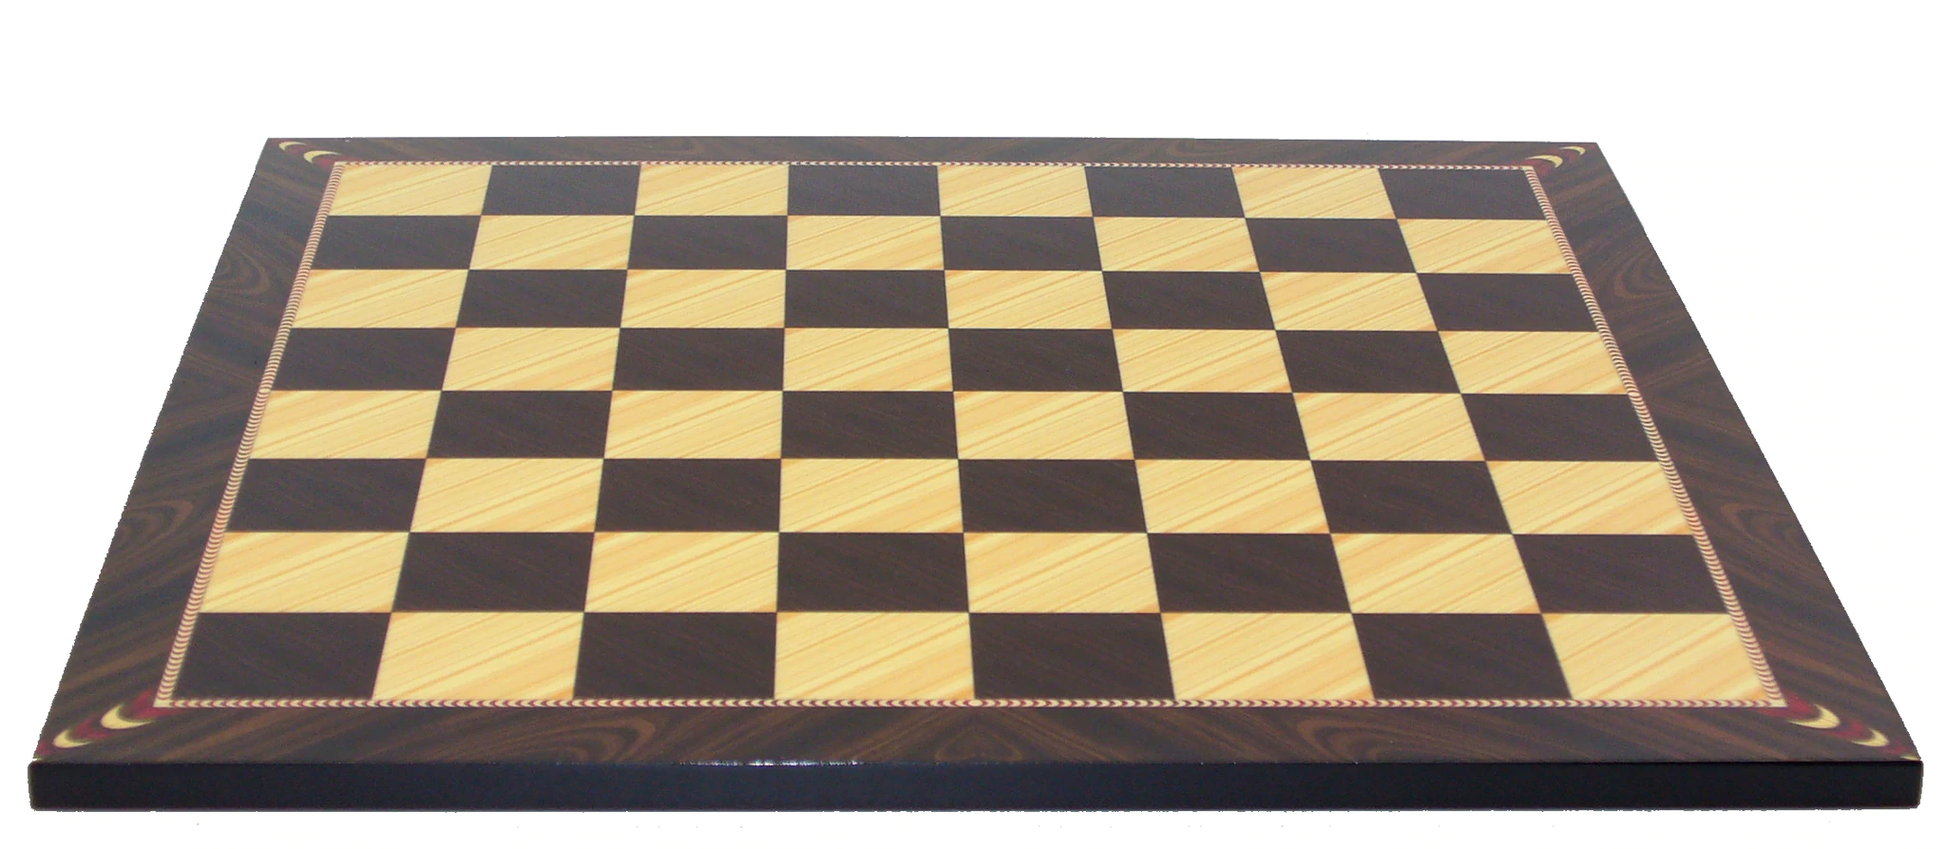 17 inch Elegance Design Alpha-Numeric Decoupage Chess Board (1.9 inch Squares)